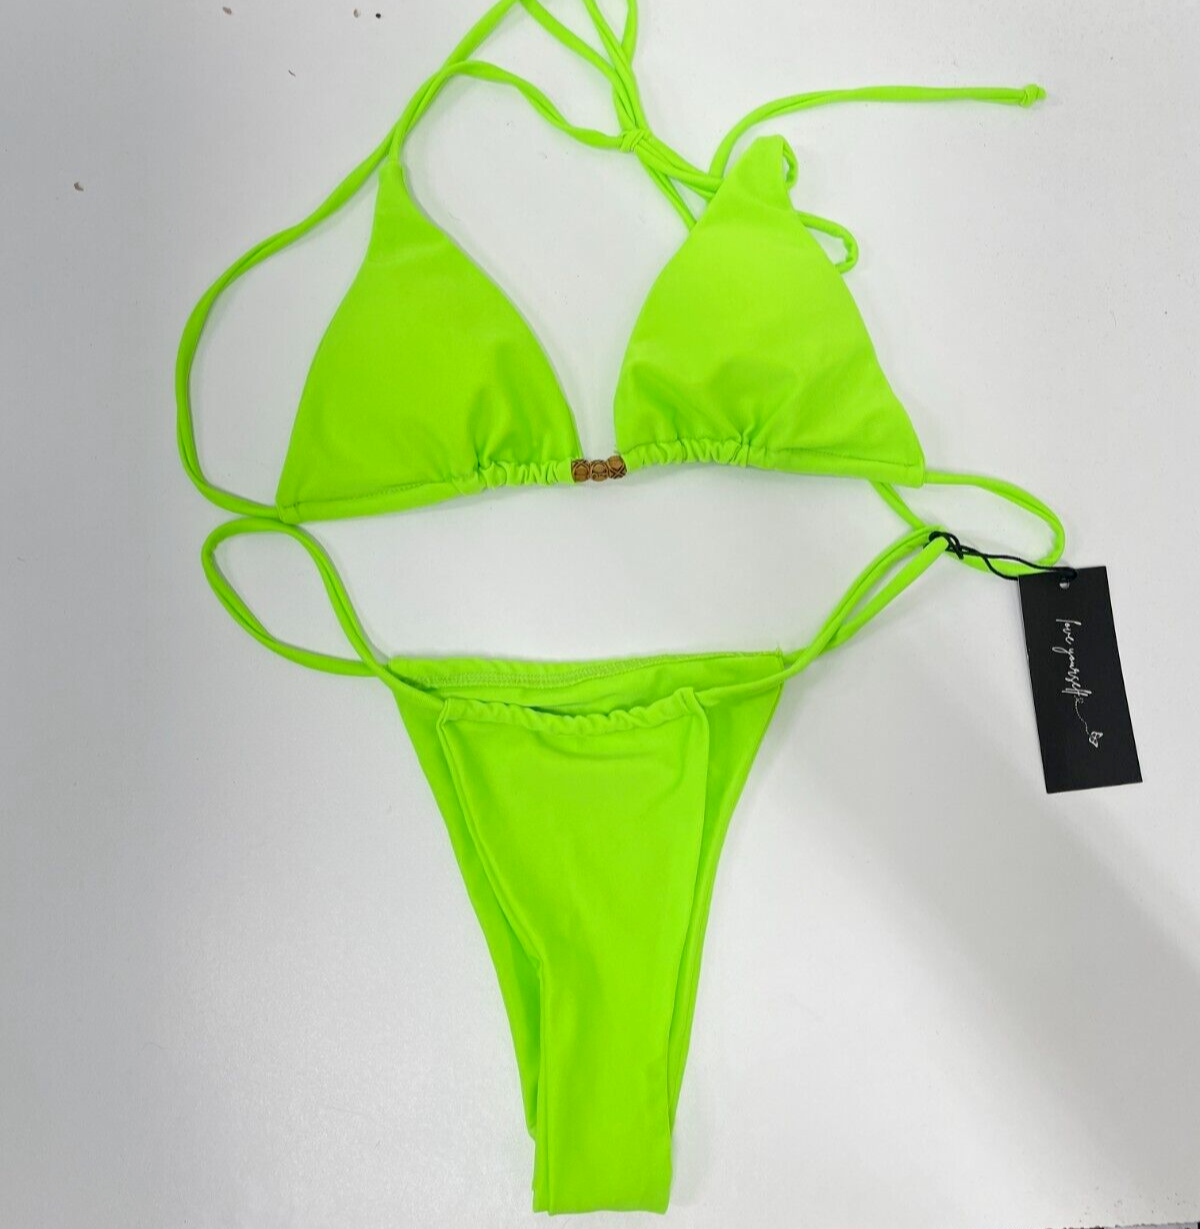 Selfe Women's M Halter String Bikini Set Lime Green 2-Piece Triangle Cheeky NWT